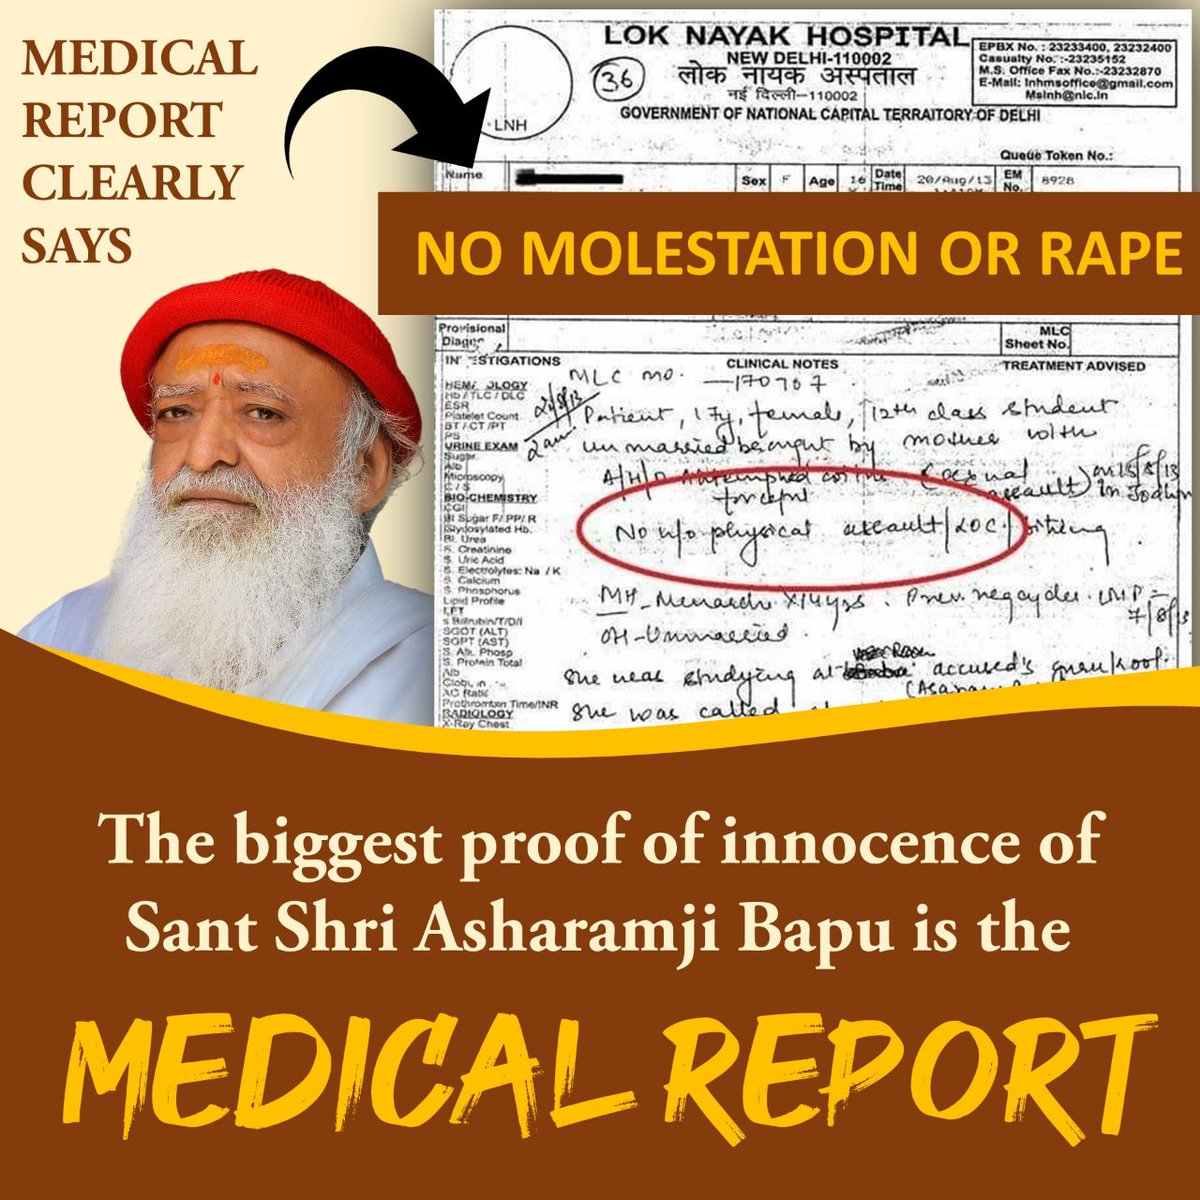 Jodhpur Files exposed the truth...
Evidences says No Rape..Misuse of POCSO Act. Judiciary said No Direct Evidence against Sant Shri Asharamji Bapu..
Then Why Life Time Imprisonment ?
#HakikatVsKahani🧐😳
So many rumours to defame a Great Hindu Sant Shri Asharamji Bapu.